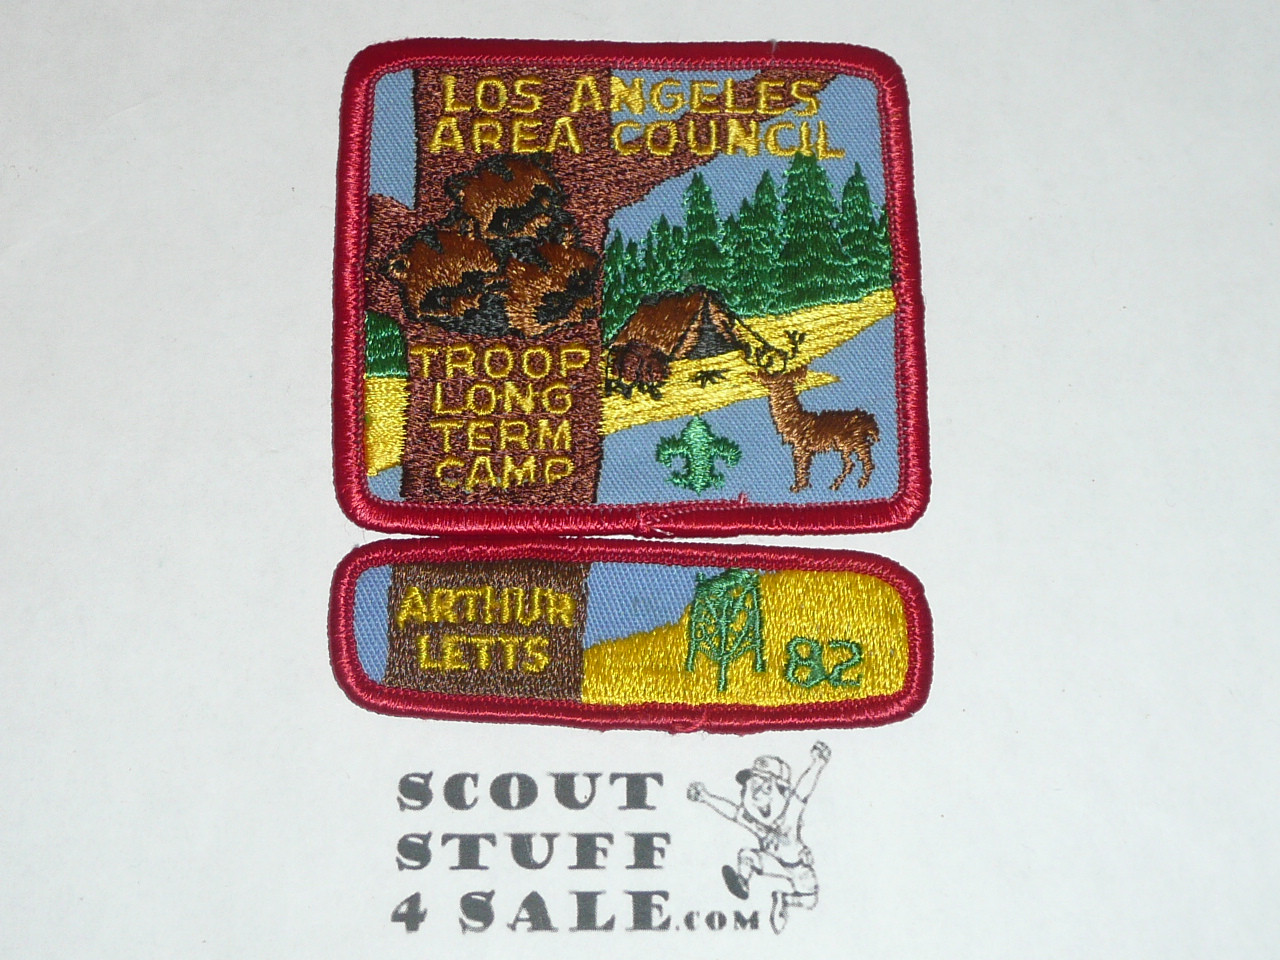 Long Term Camp Patch with Arthur Letts 82 segment, Los Angeles Area Council, 1982